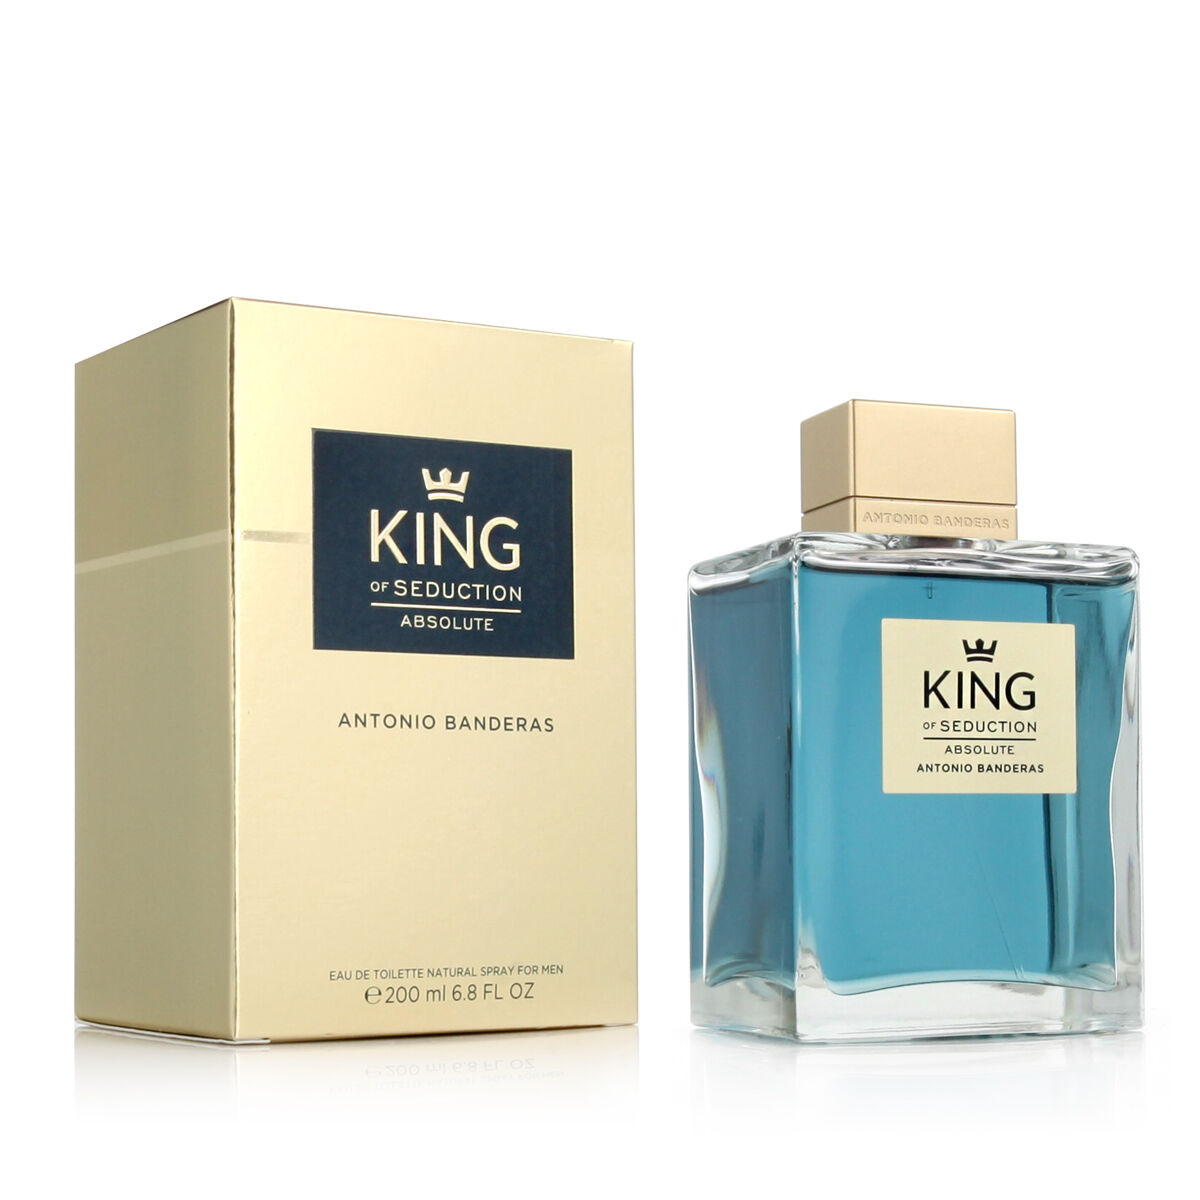 Parfum Homme Antonio Banderas EDT King of Seduction Absolute 200 ml